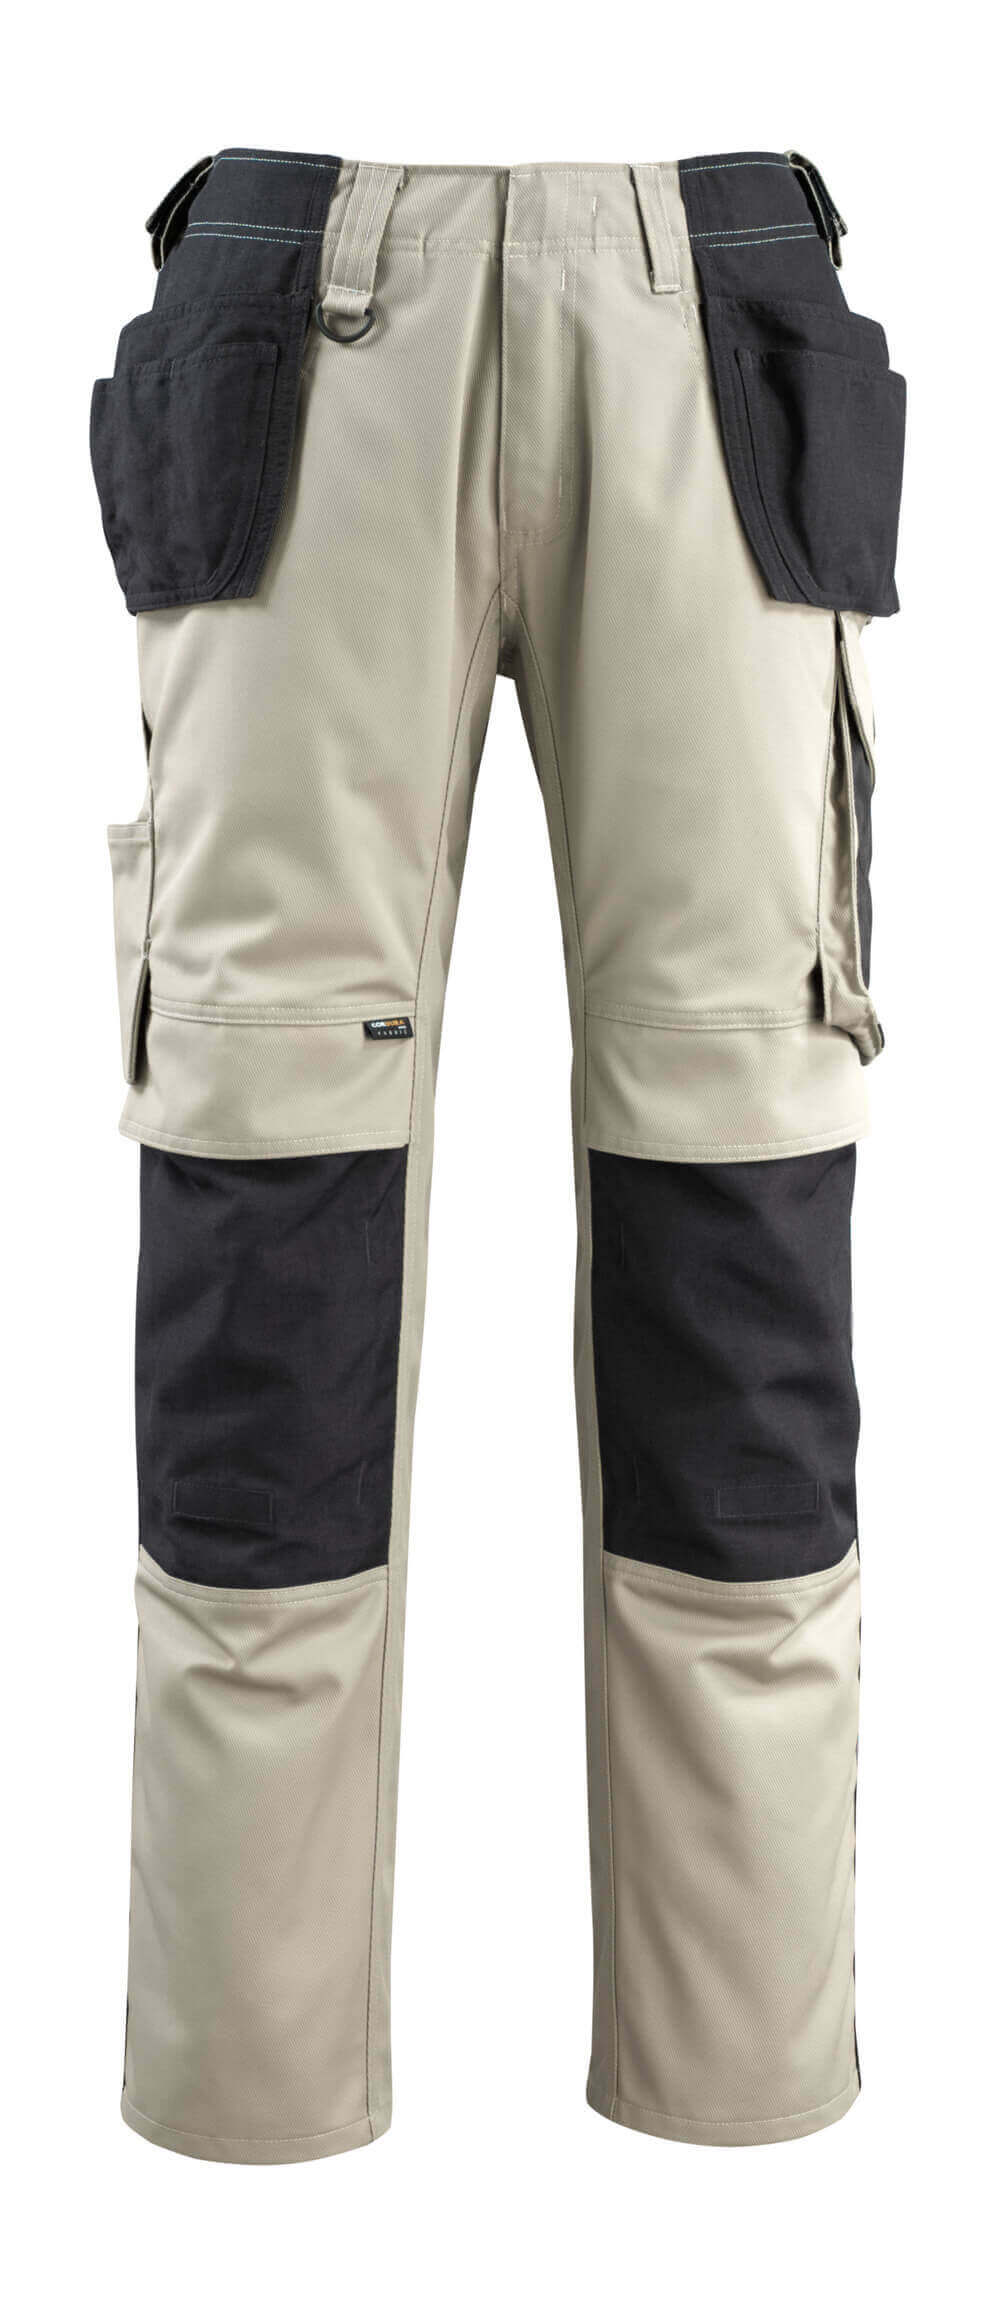 Mascot UNIQUE  Bremen Trousers with holster pockets 14031 light khaki/black